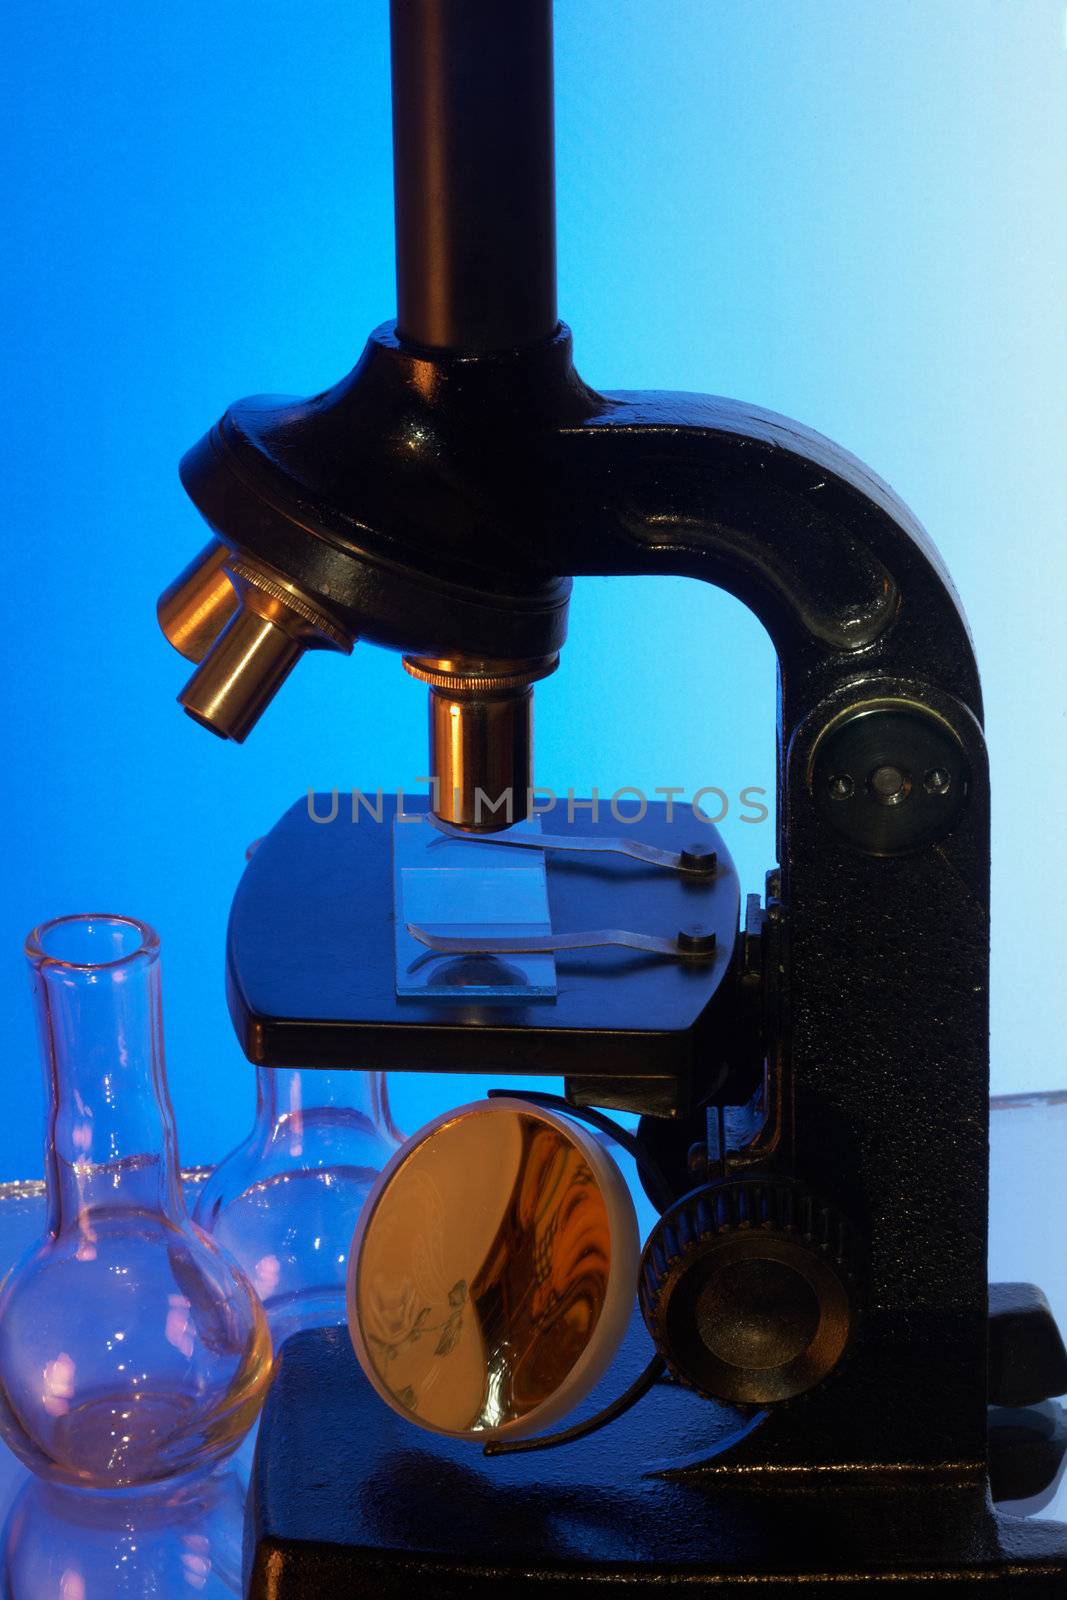 Microscope and laboratory glasswares by petrkurgan